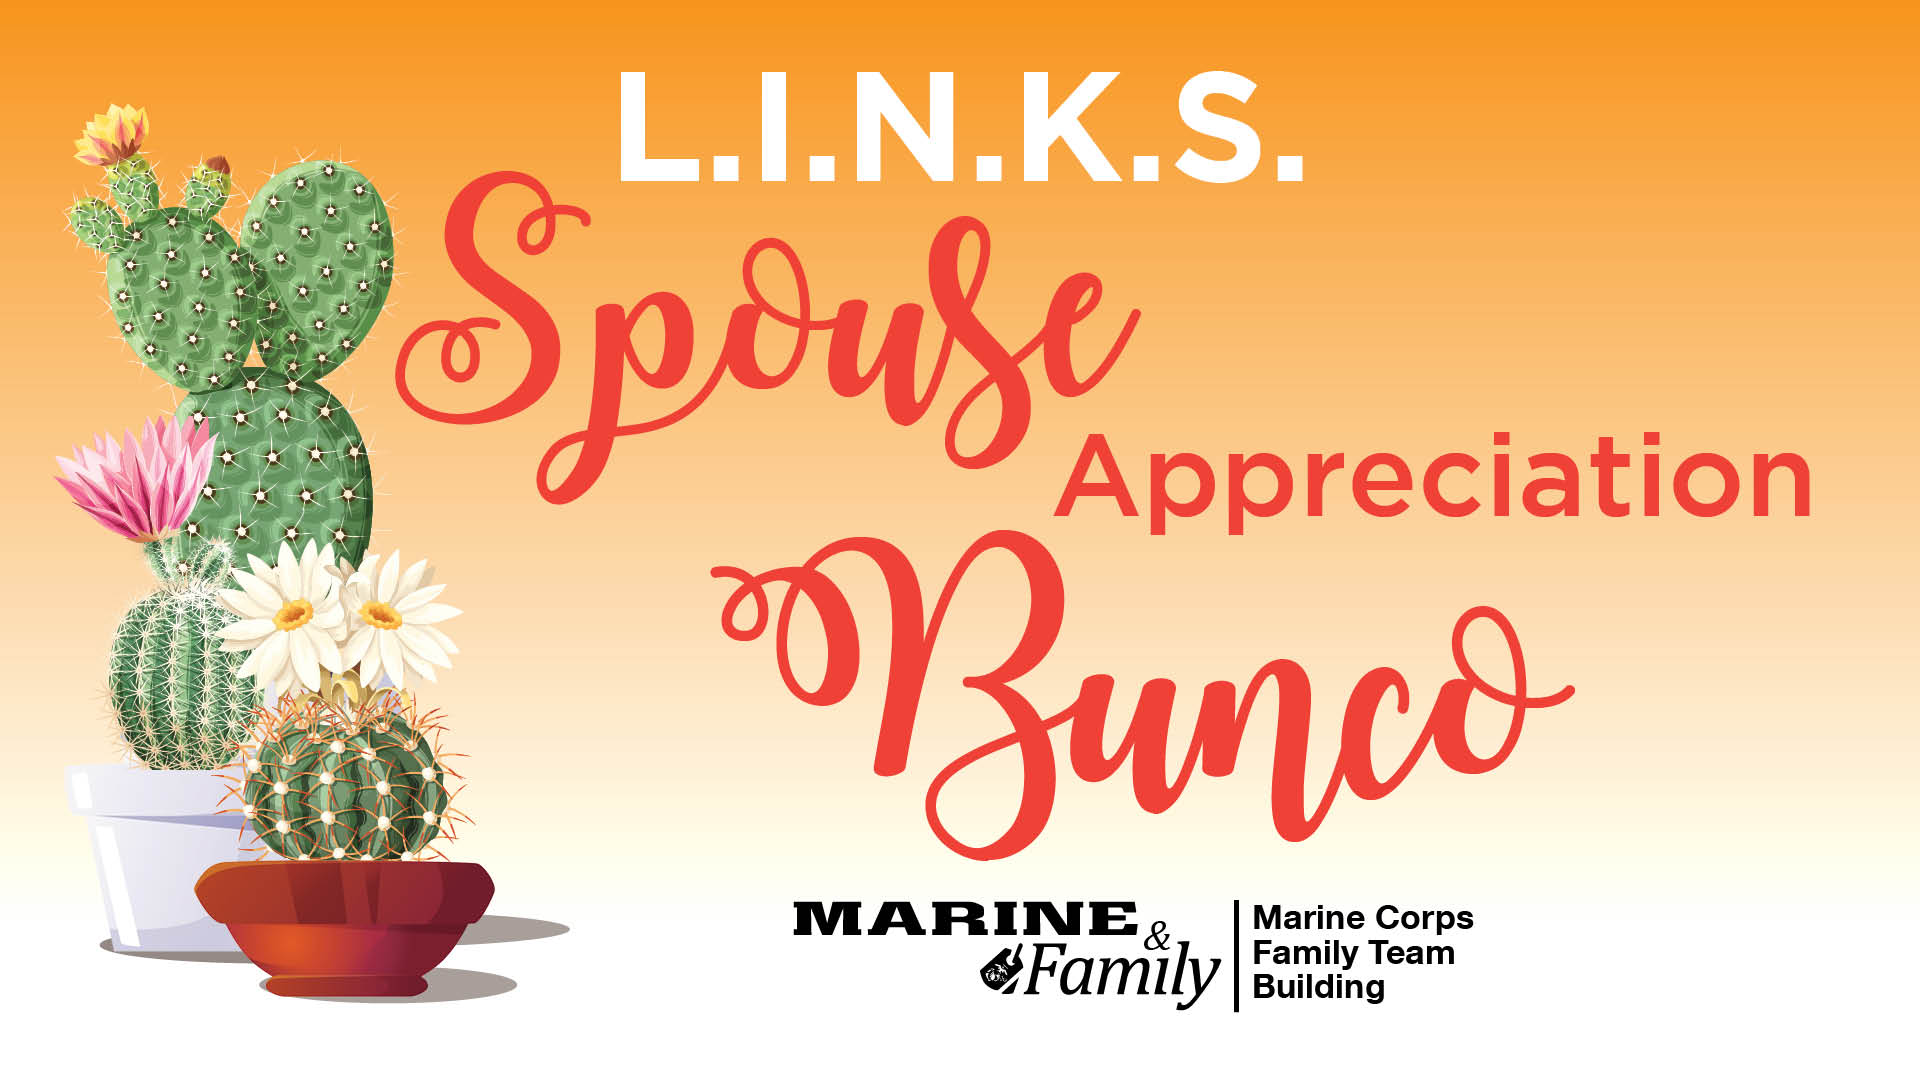 L.I.N.K.S. Spouse Appreciation Bunco